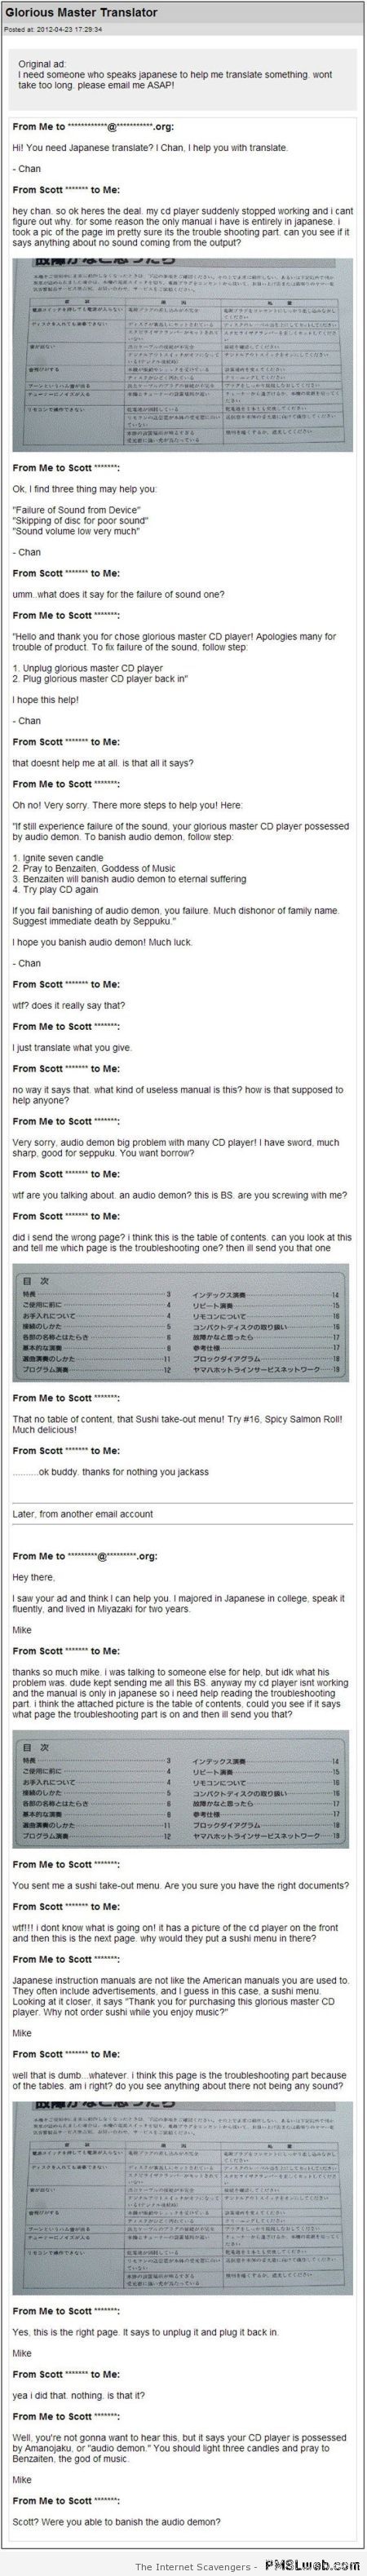 Chinese translation prank at PMSLweb.com